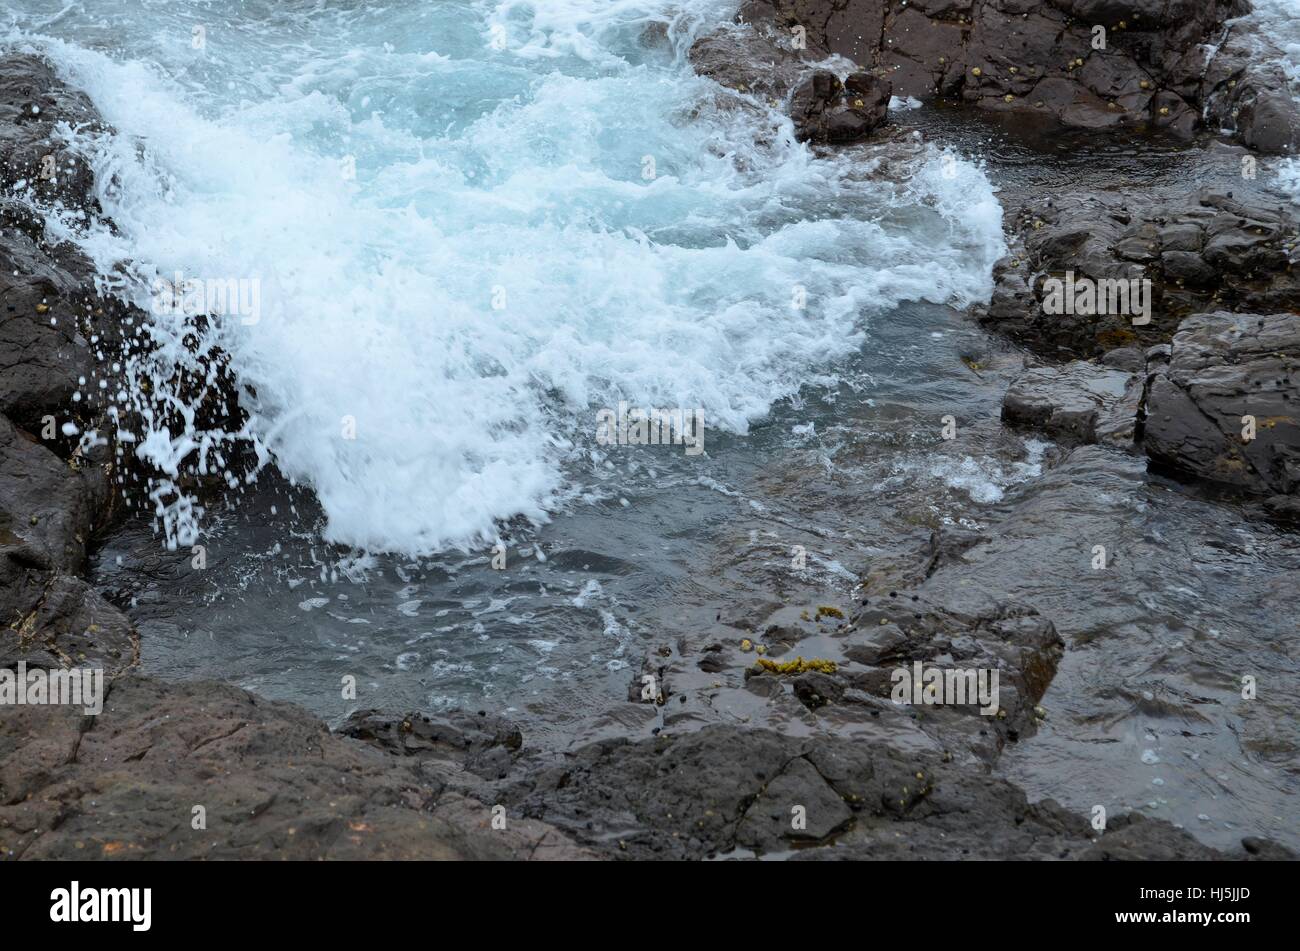 Wave crashing onto rocks flowing into rock pool Stock Photo